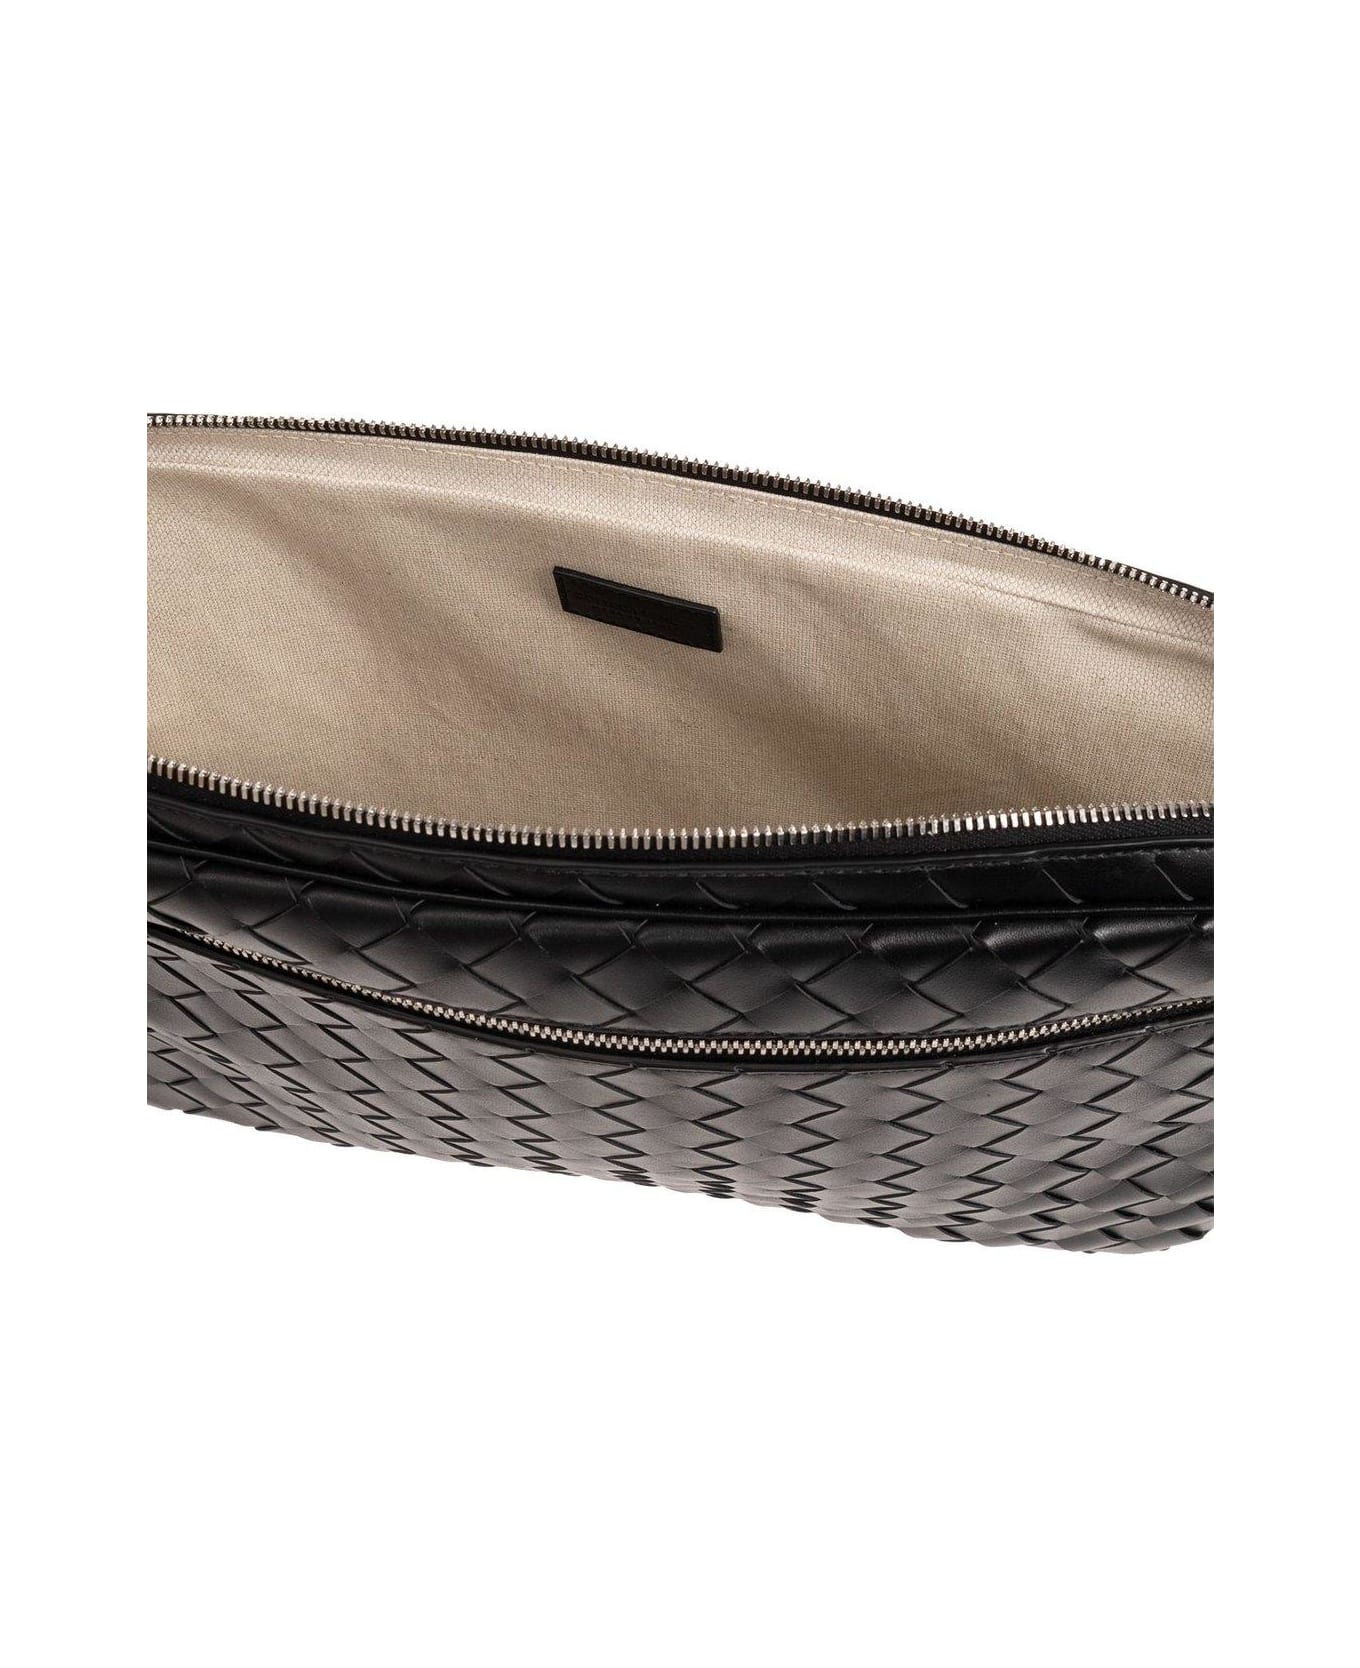 Bottega Veneta Intrecciato Zipped Clutch Bag - Black/silver